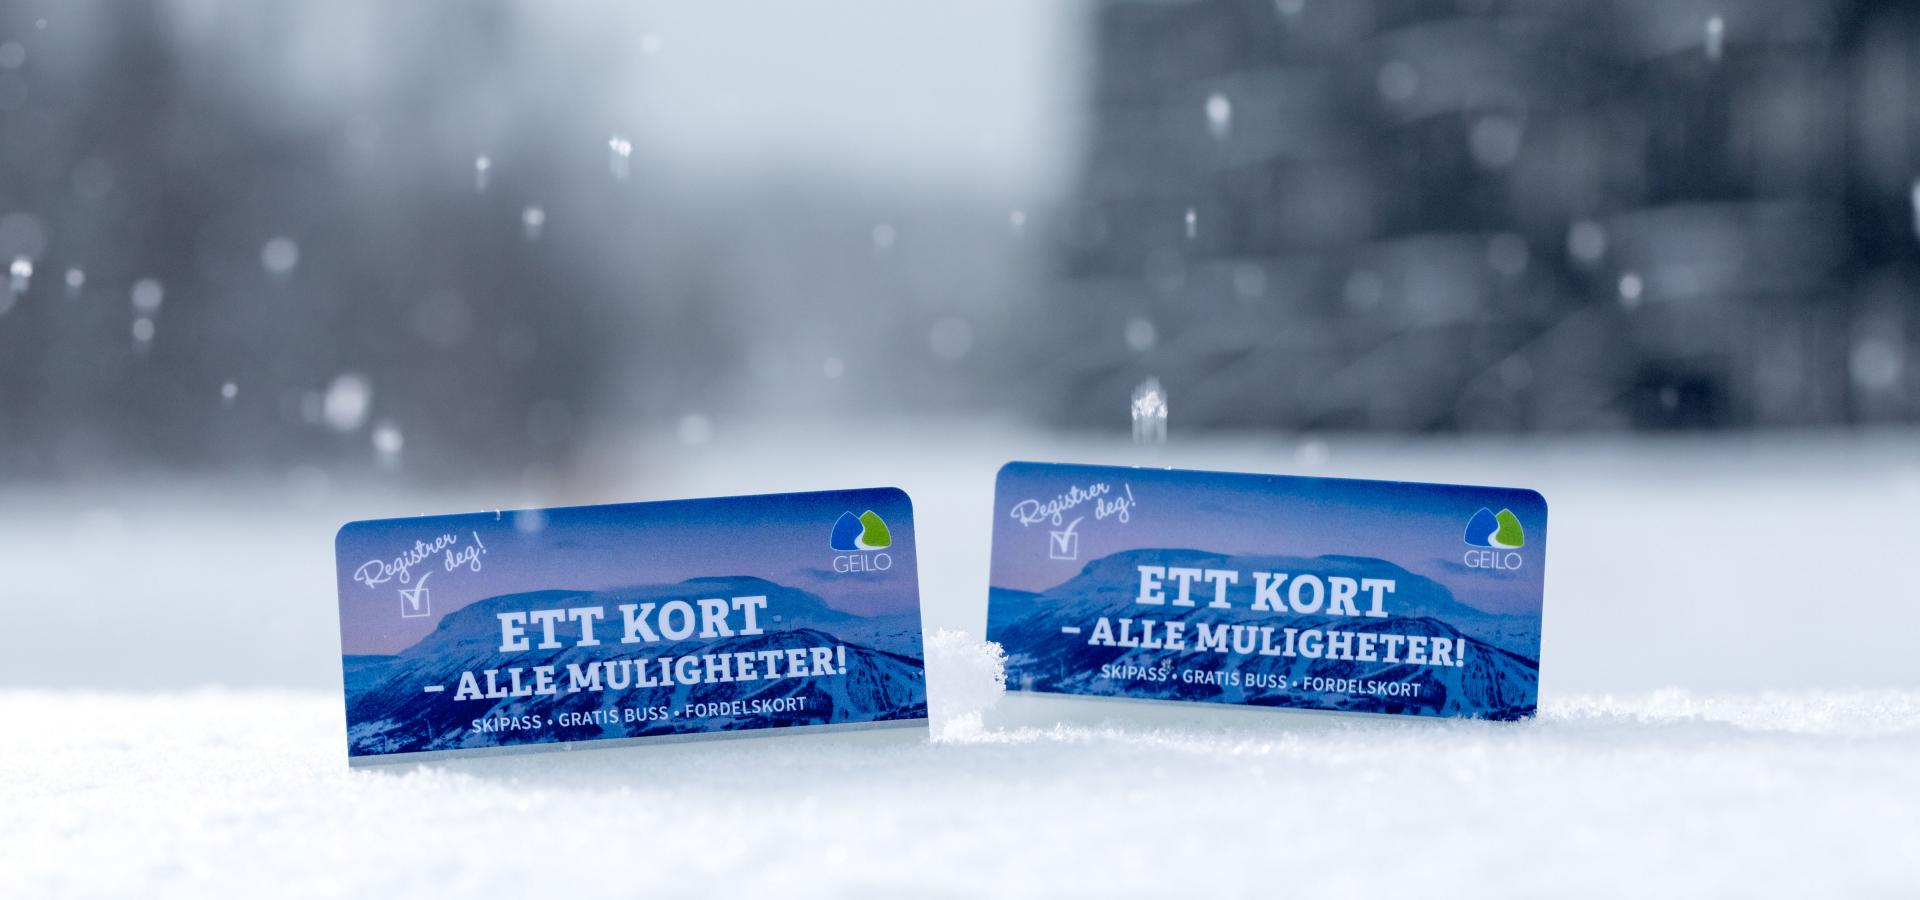 Buy your ski pass at skigeilo.no  SkiGeilo